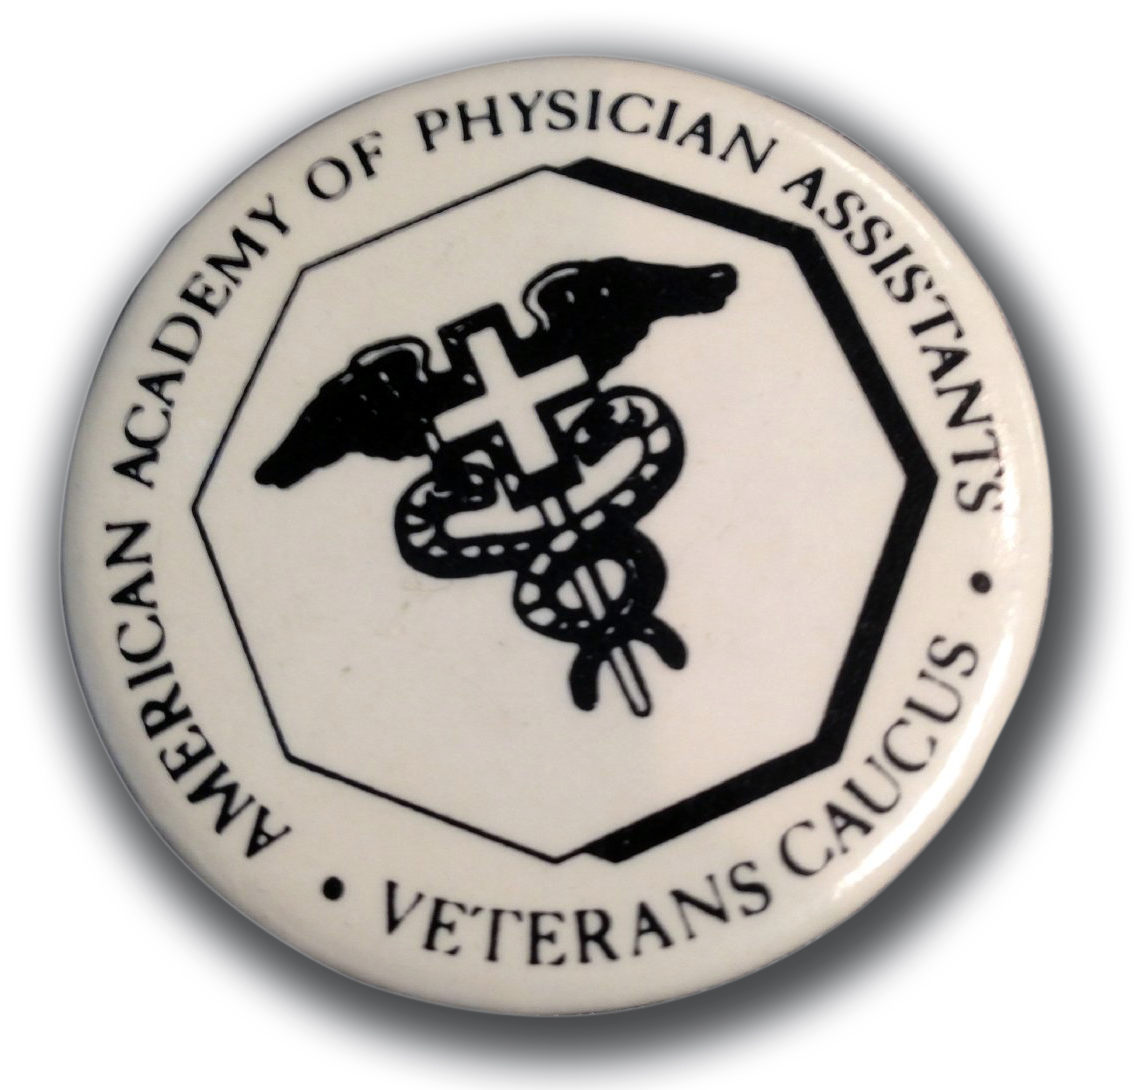 AAPA-VeteransCaucus-Logo